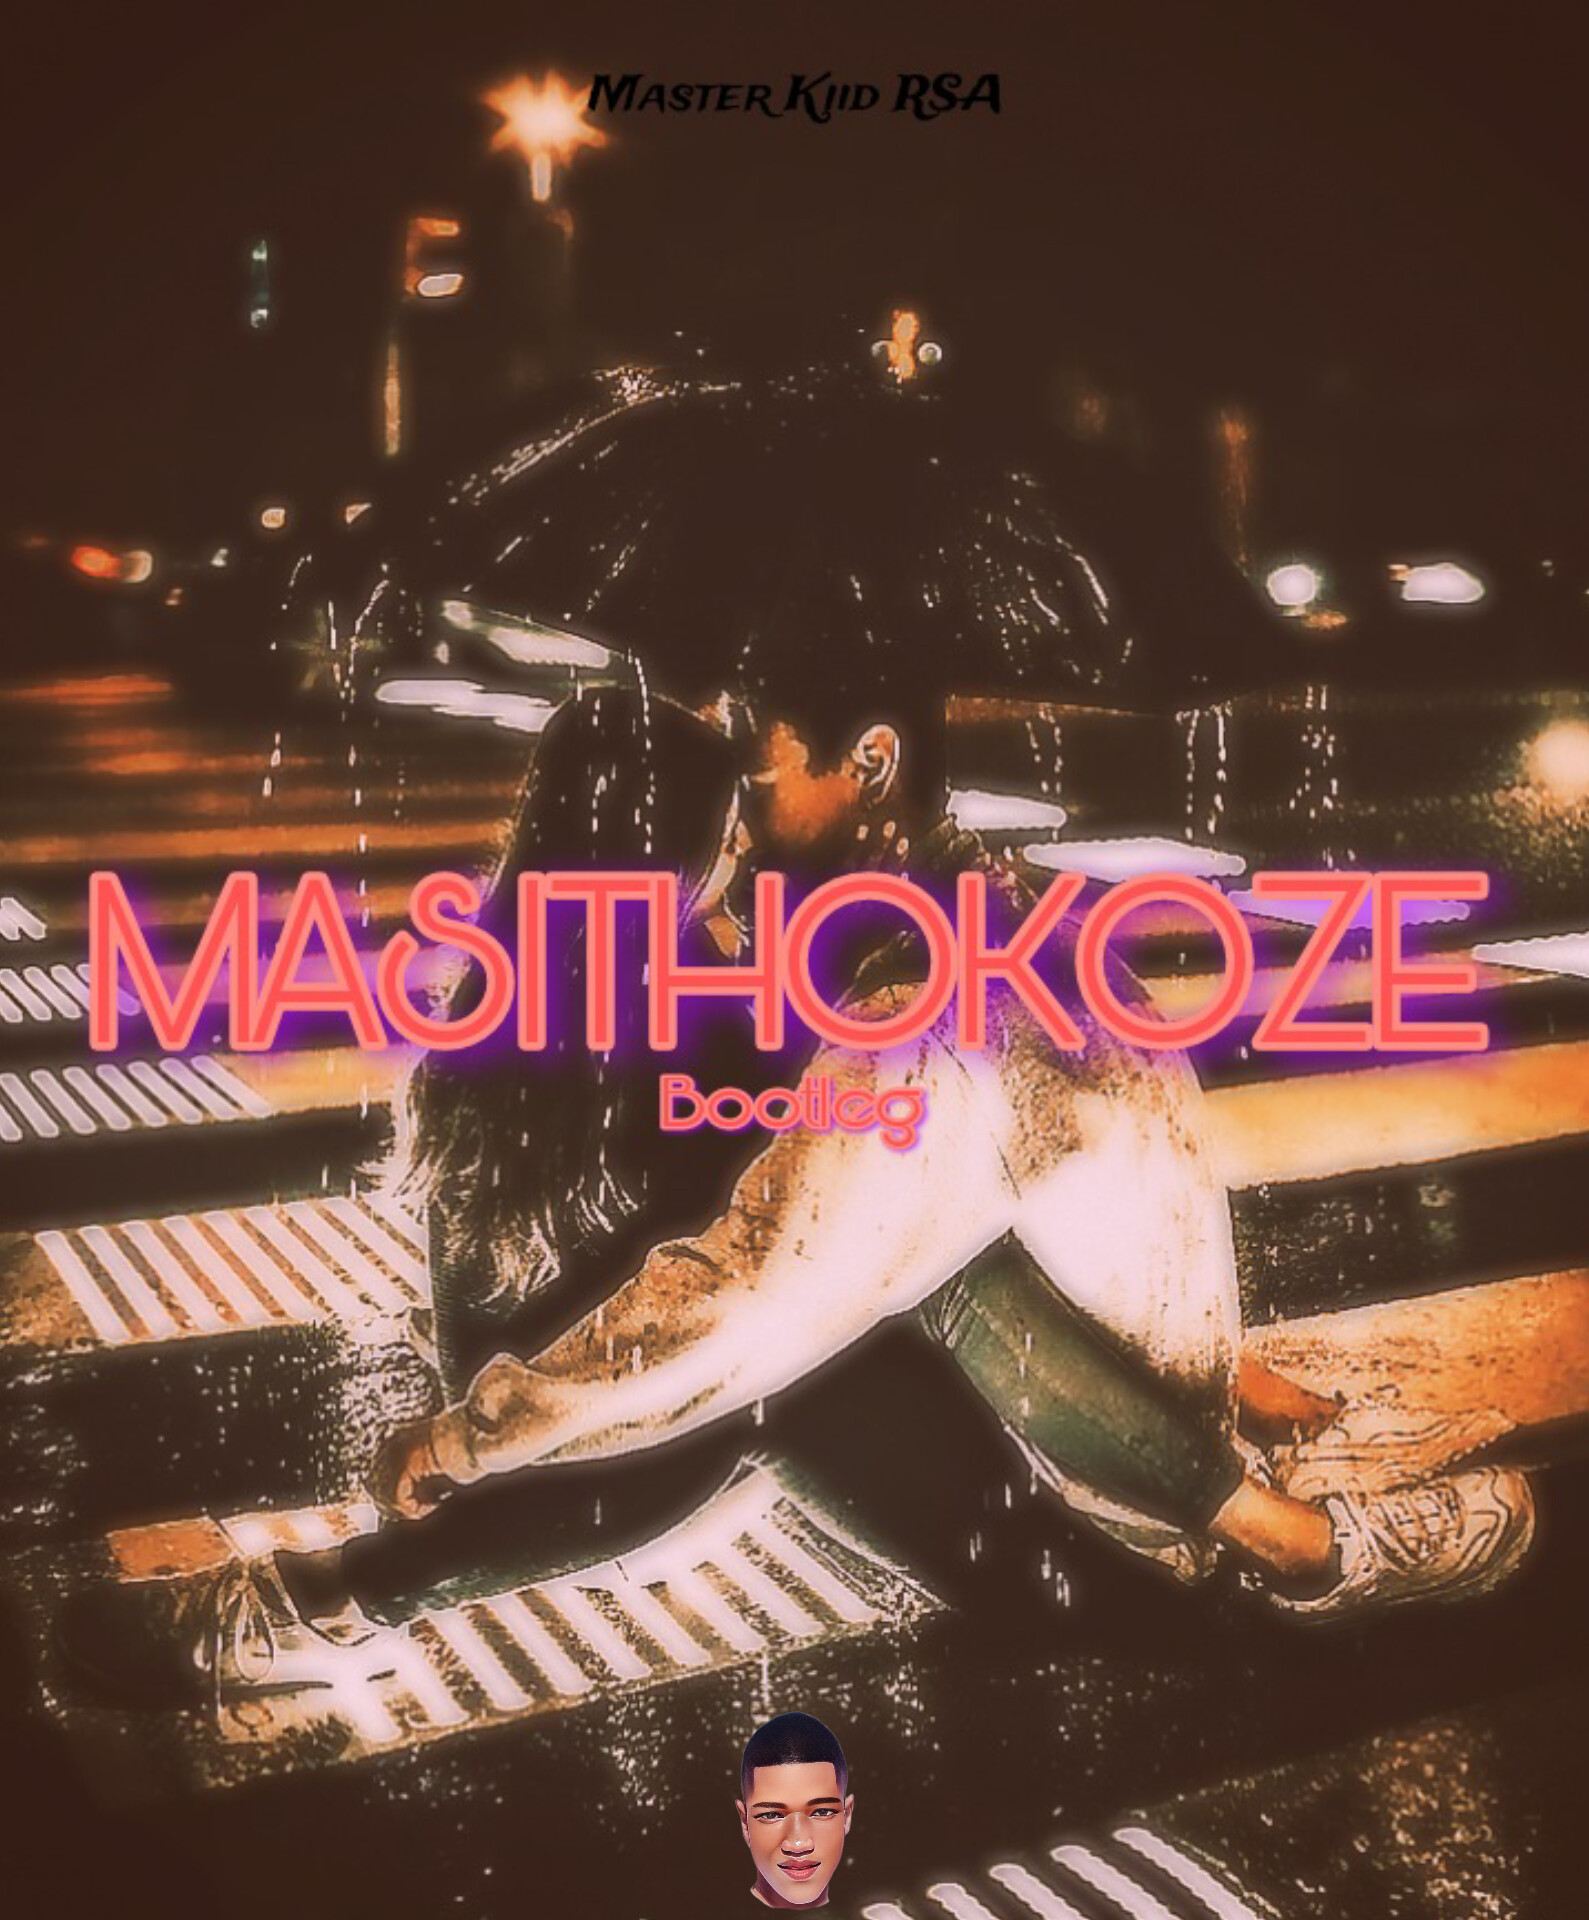 Masithokoze (Bootleg) - Master Kiid RSA